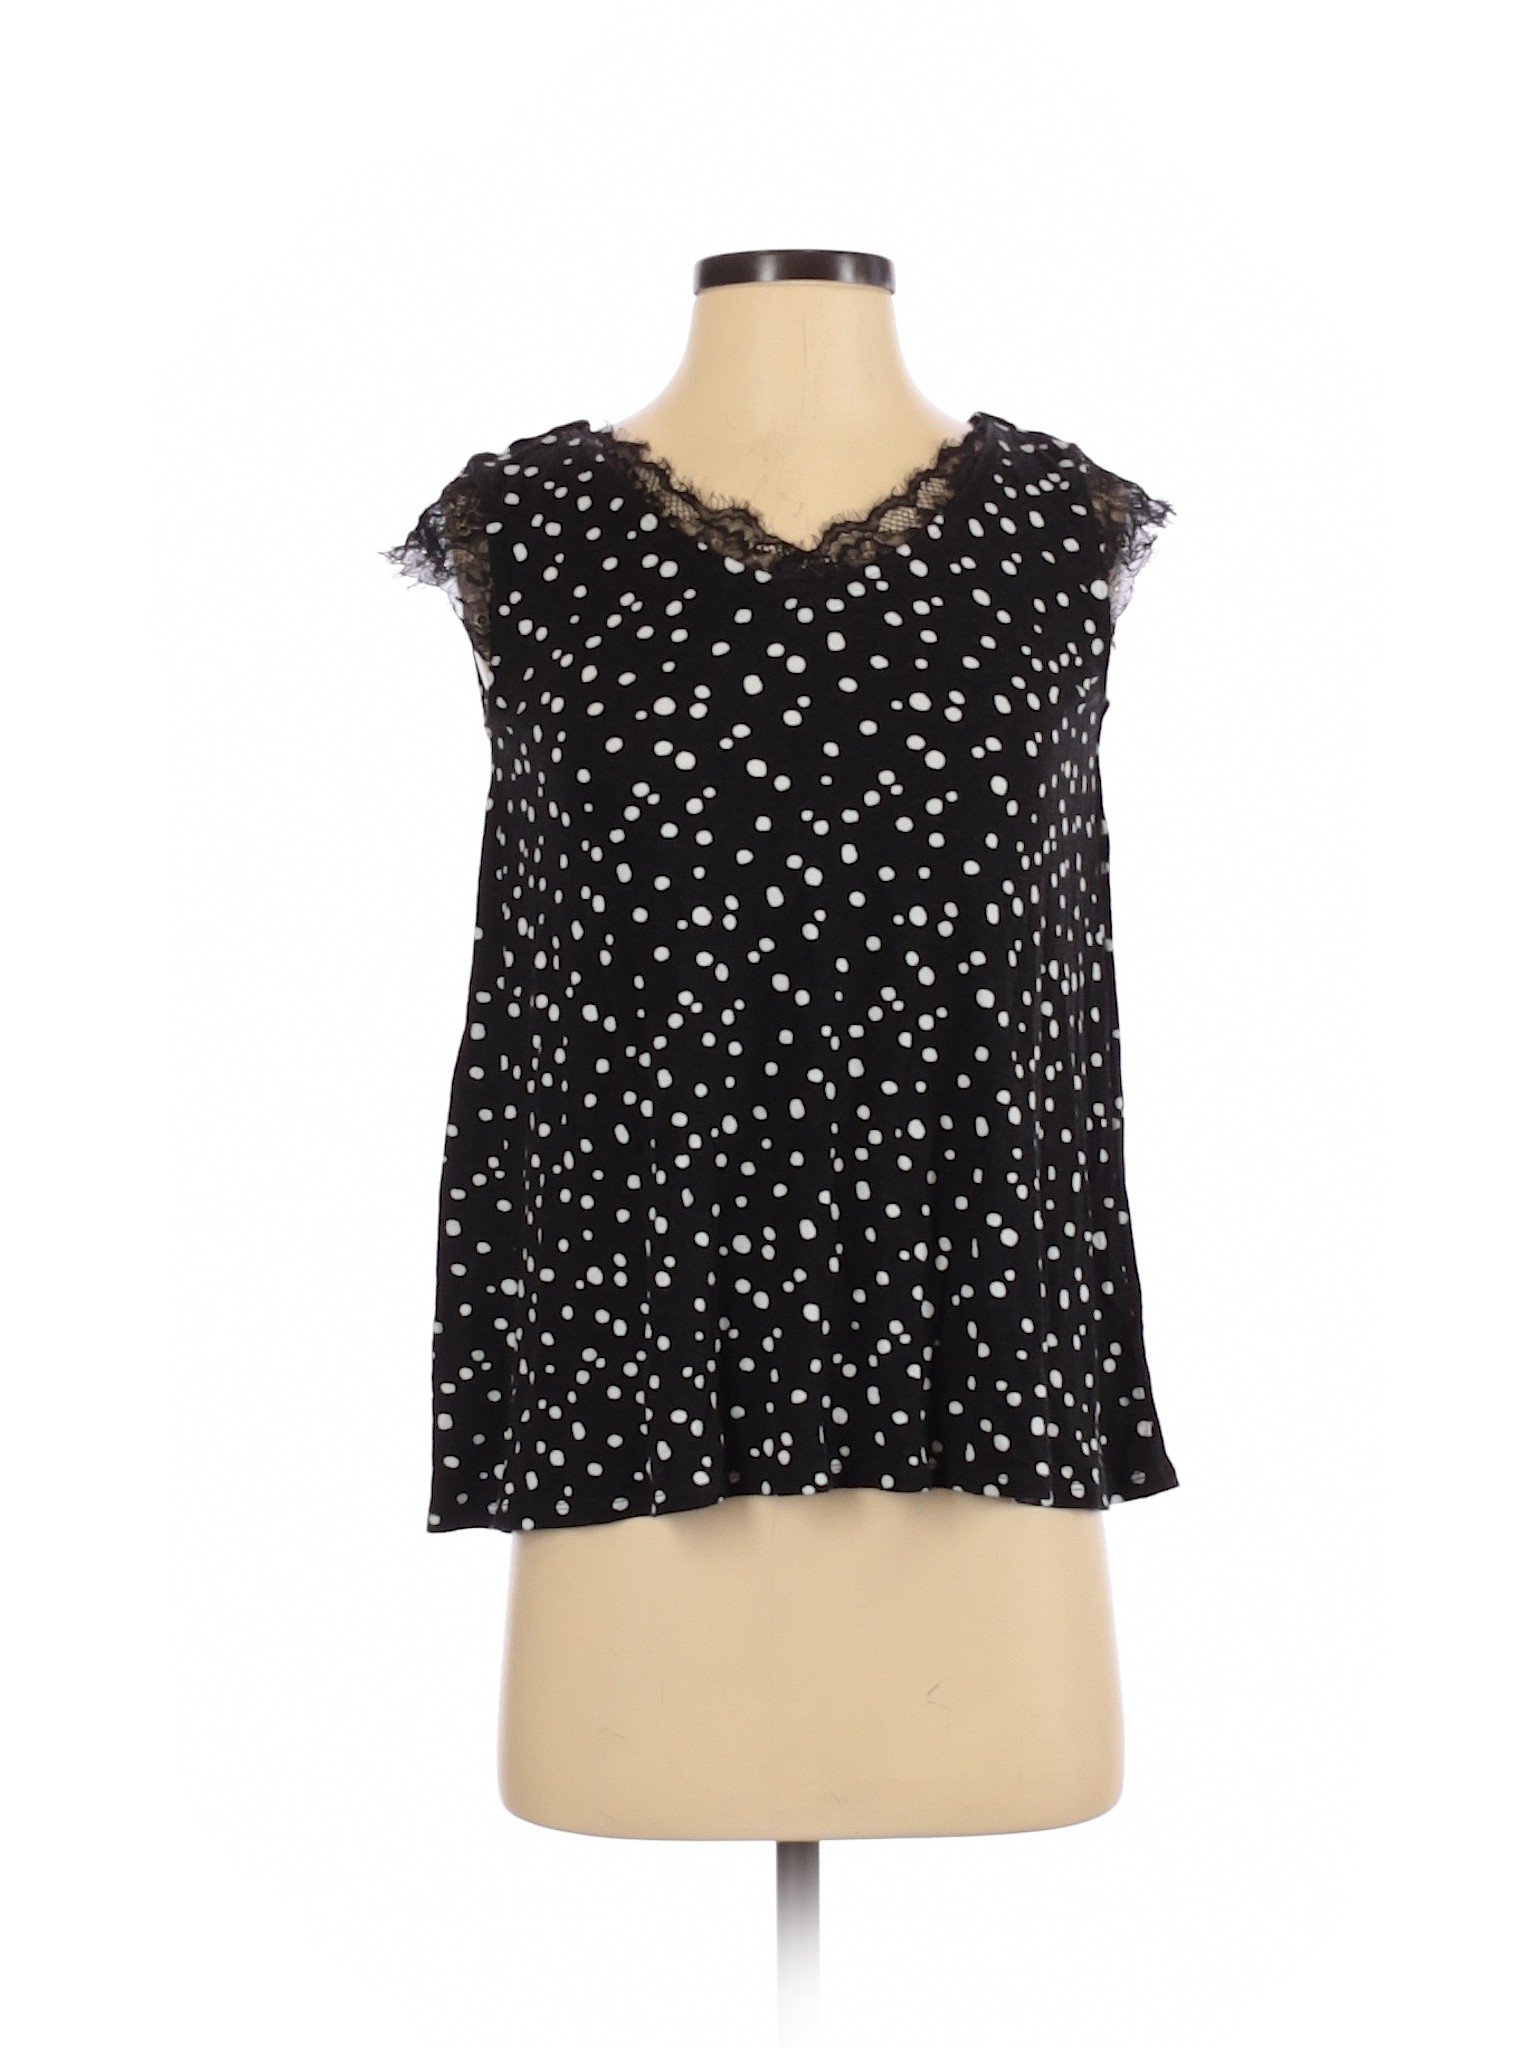 Maurices Women Black Short Sleeve Top XS | eBay